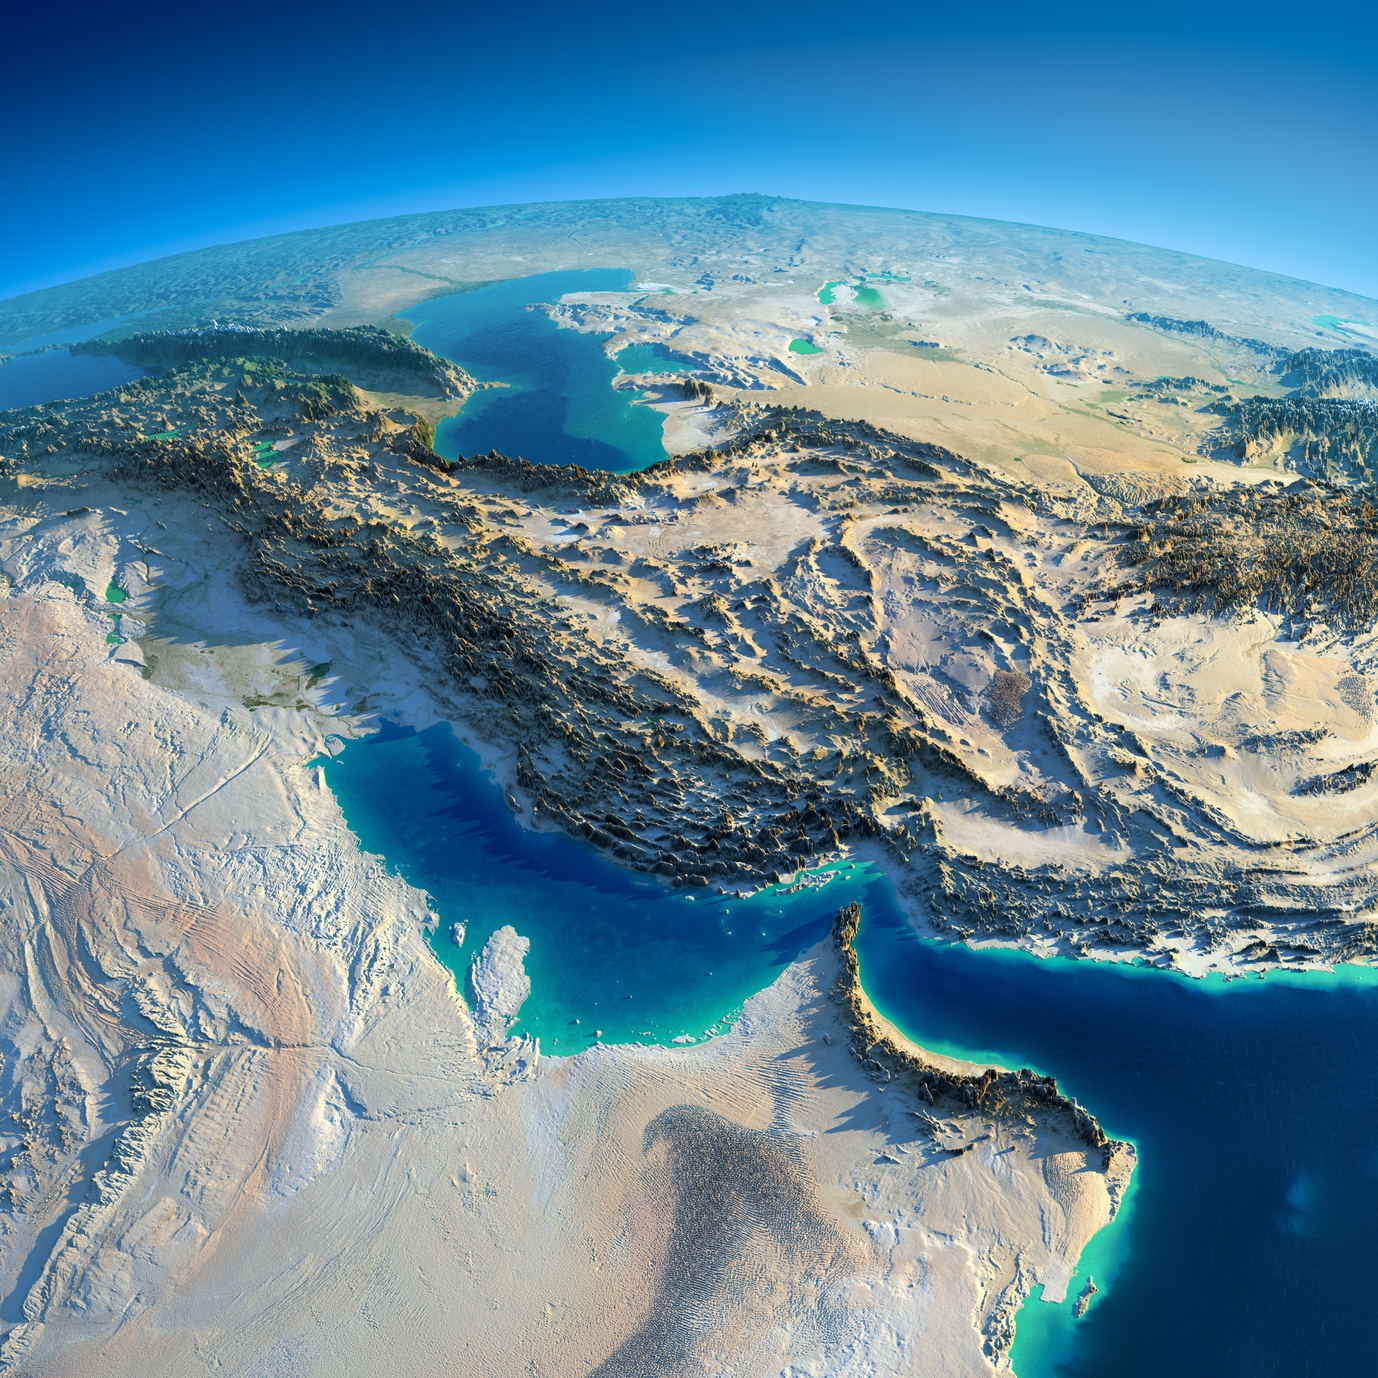 Aerial photo of the Gulf region